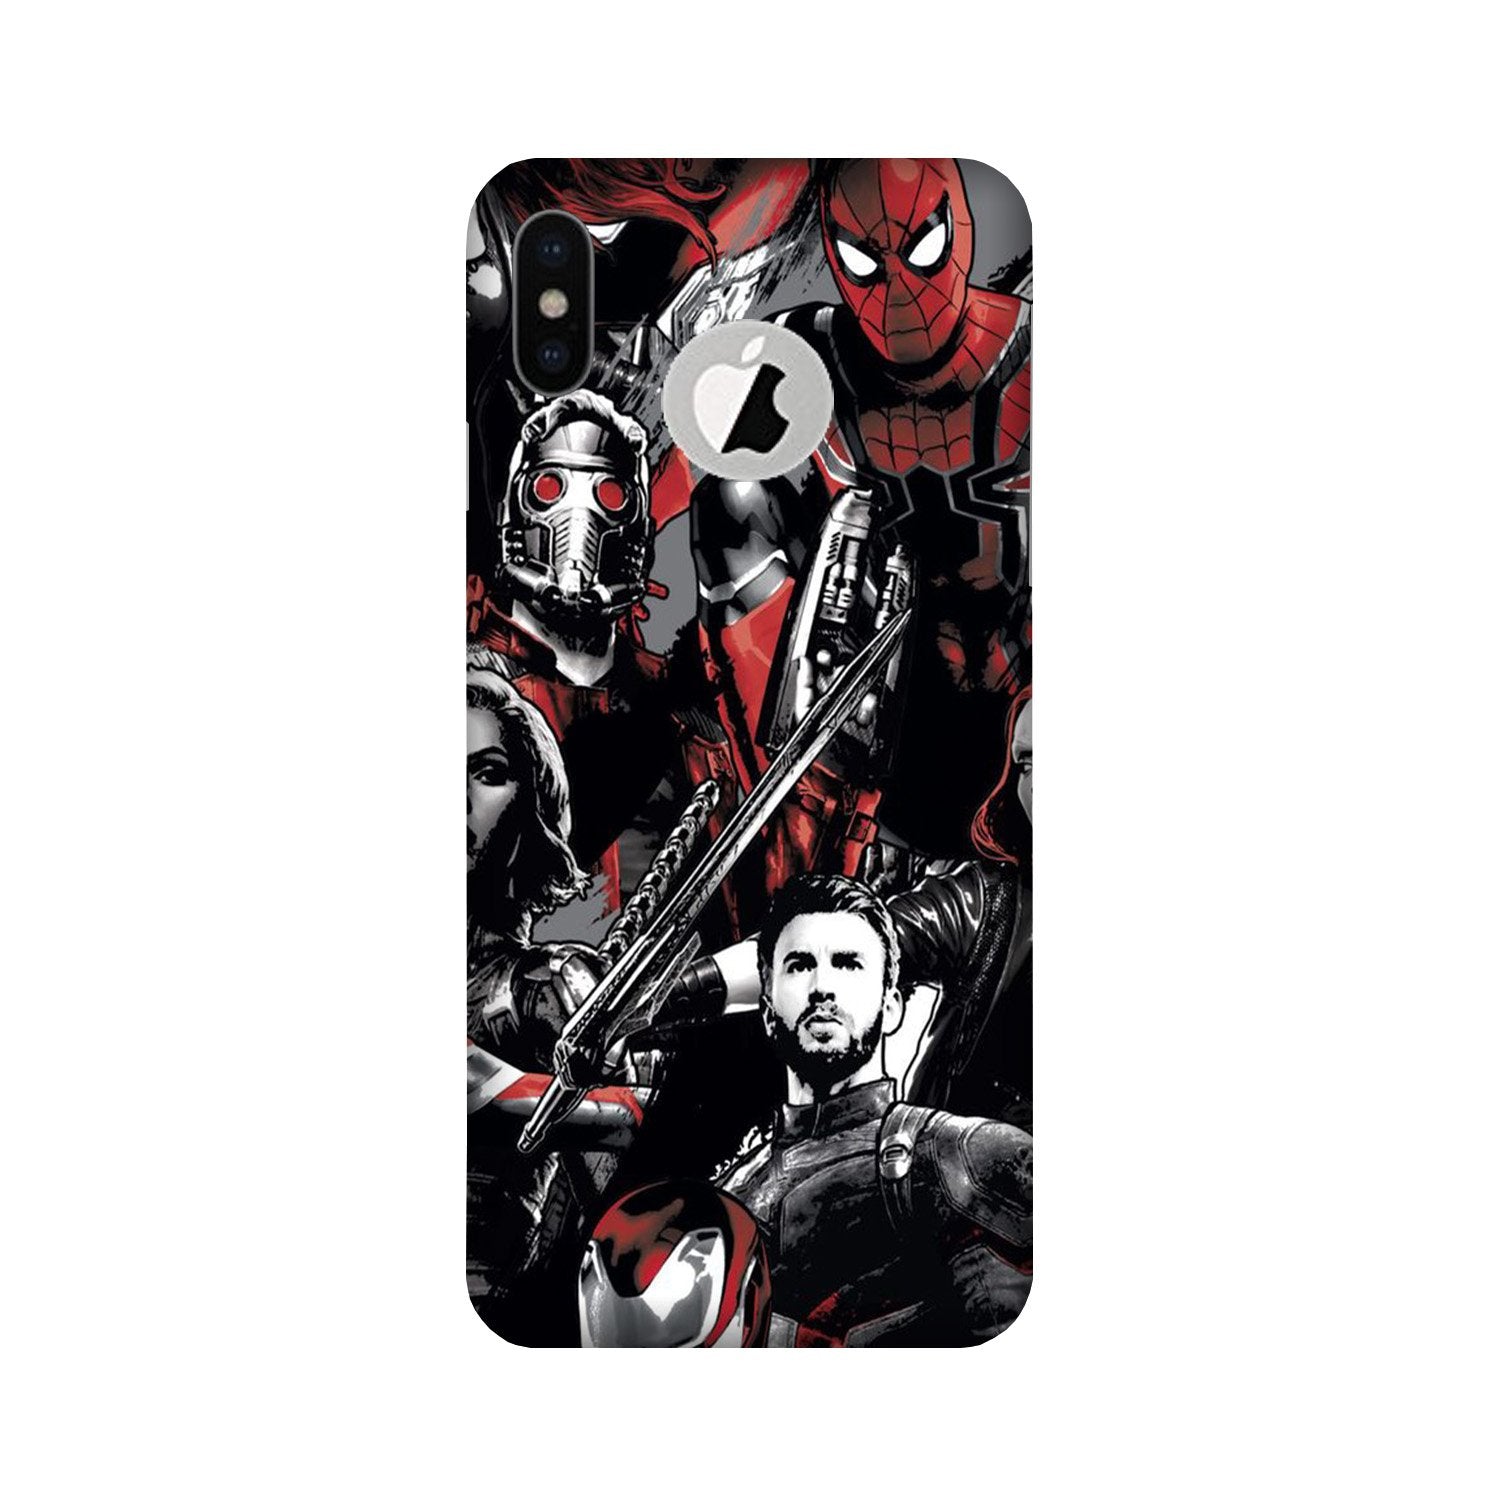 Avengers Case for iPhone X logo cut (Design - 190)